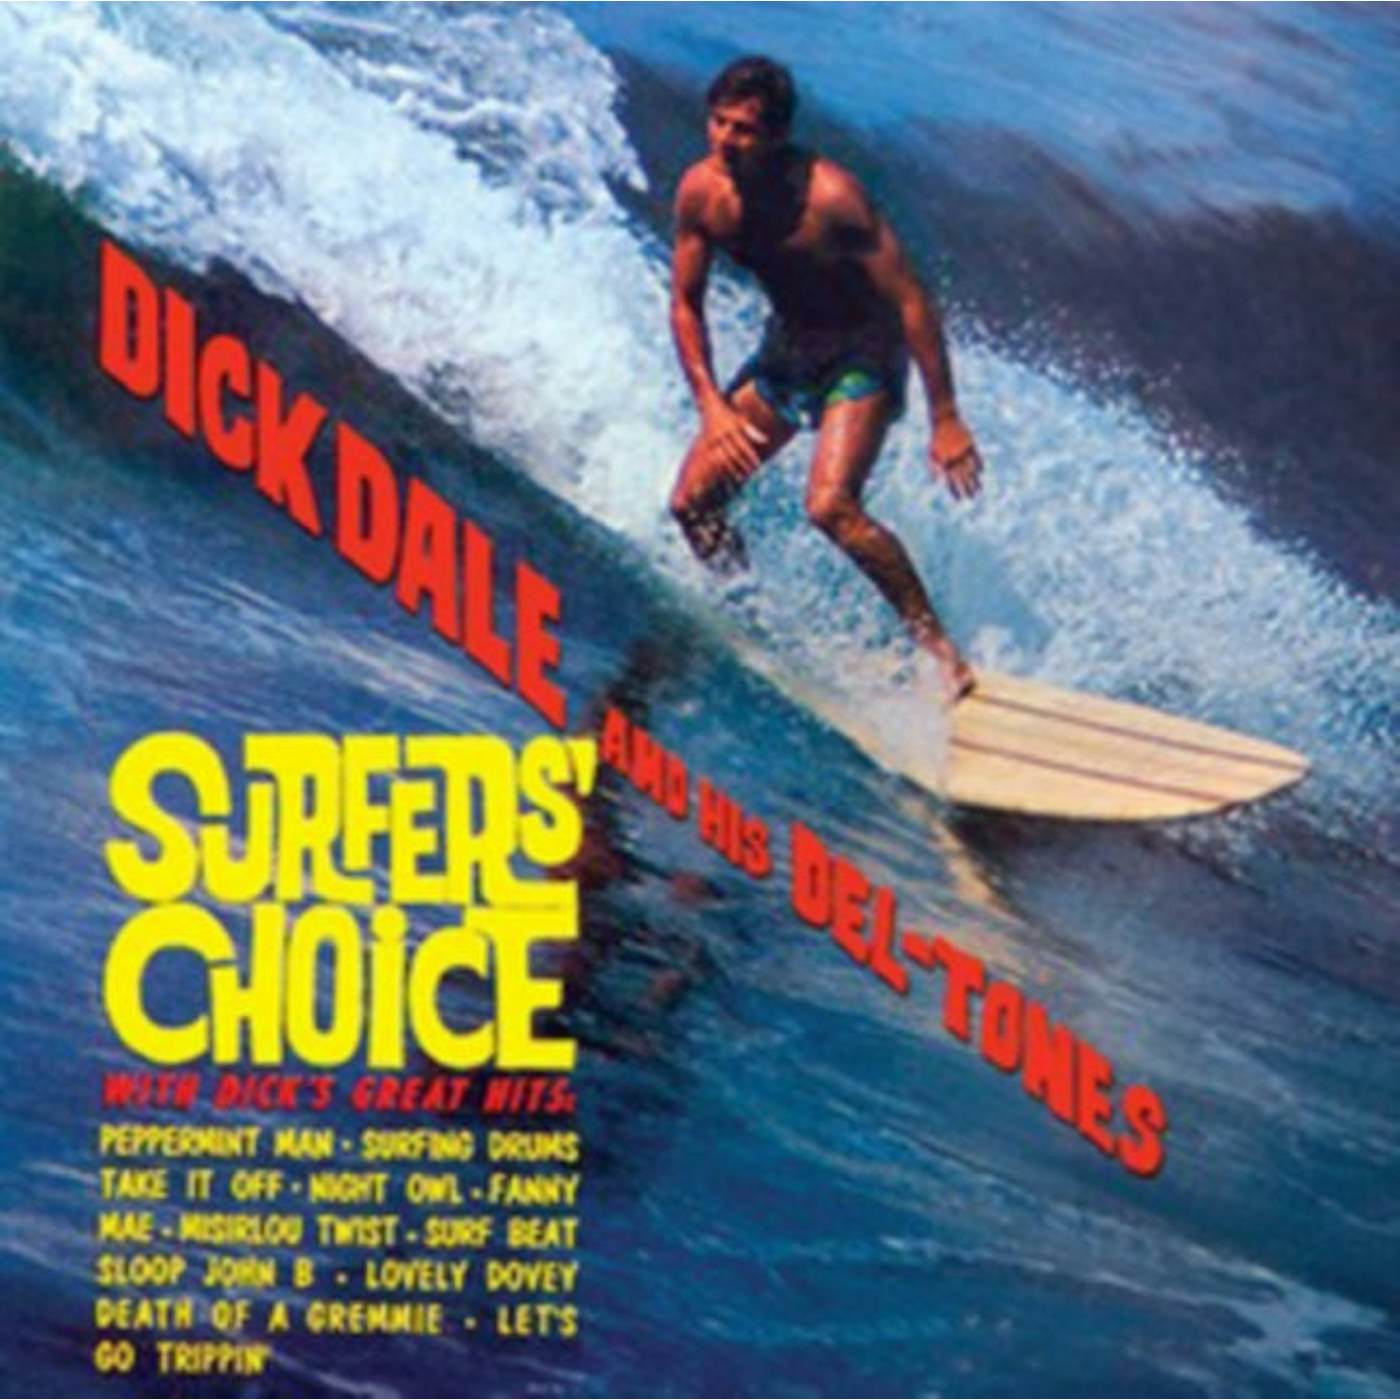 Dick Dale & His Del-Tones CD - Surfer's Choice